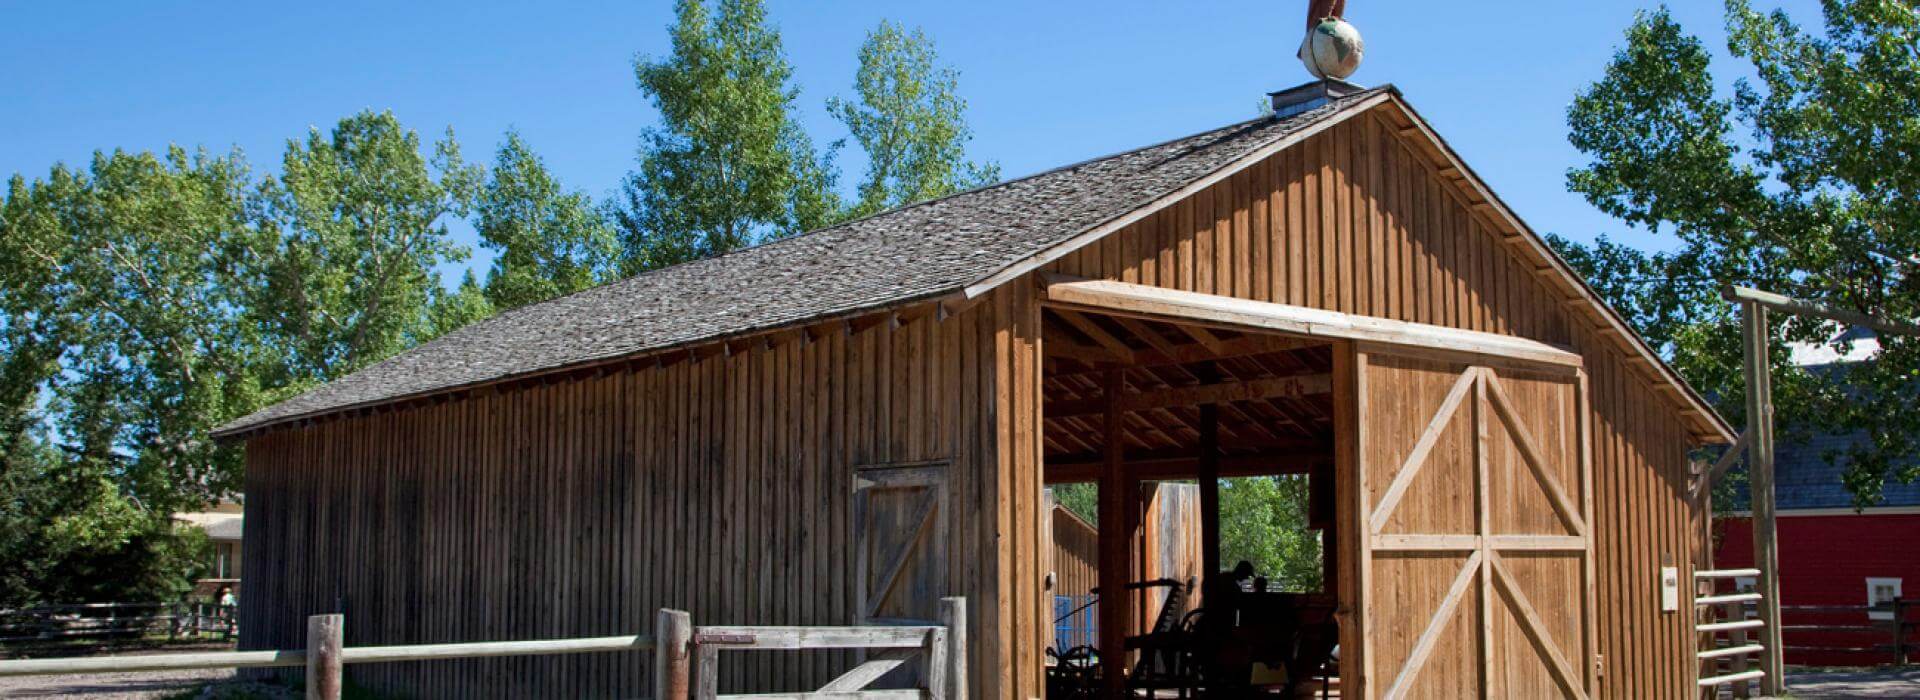 1 story barn made of wood